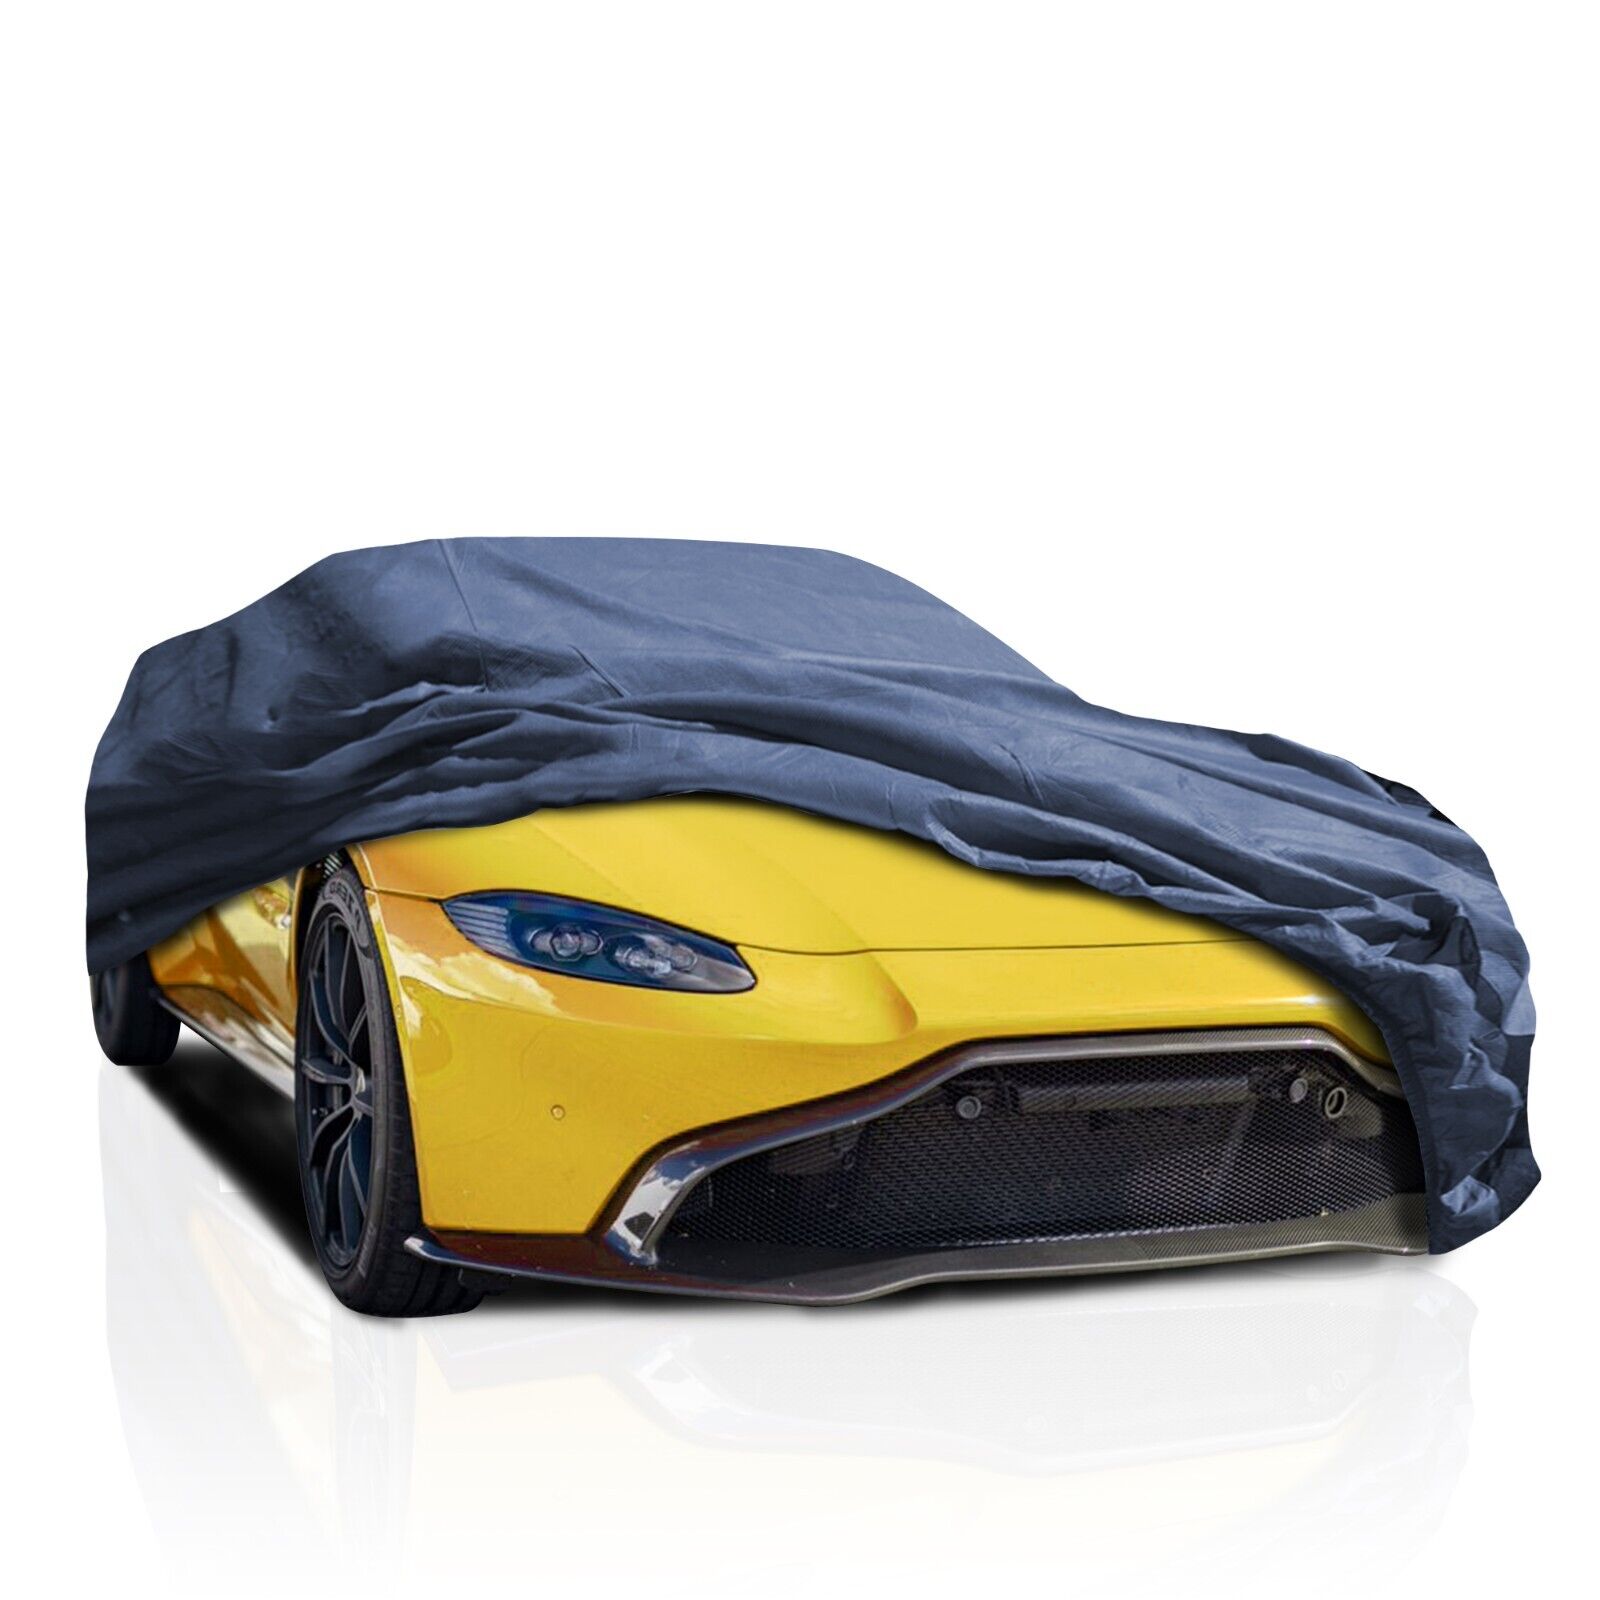 [CCT] 4 Layer Car Cover For Aston Martin Vanquish Volante 2014 2015 2016 2017